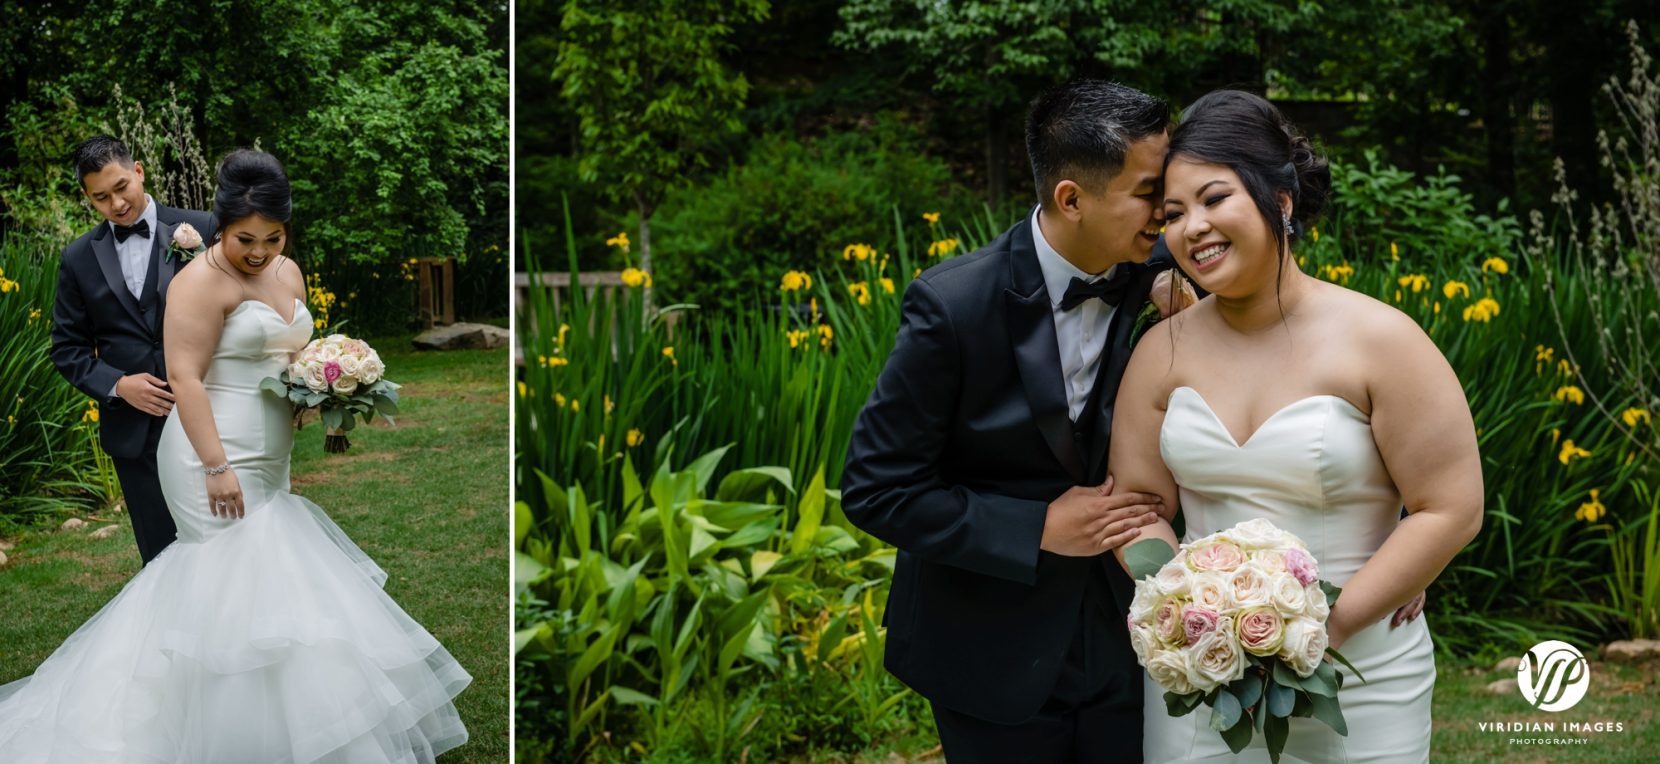 groom twirls bride and portrait after first look in garden